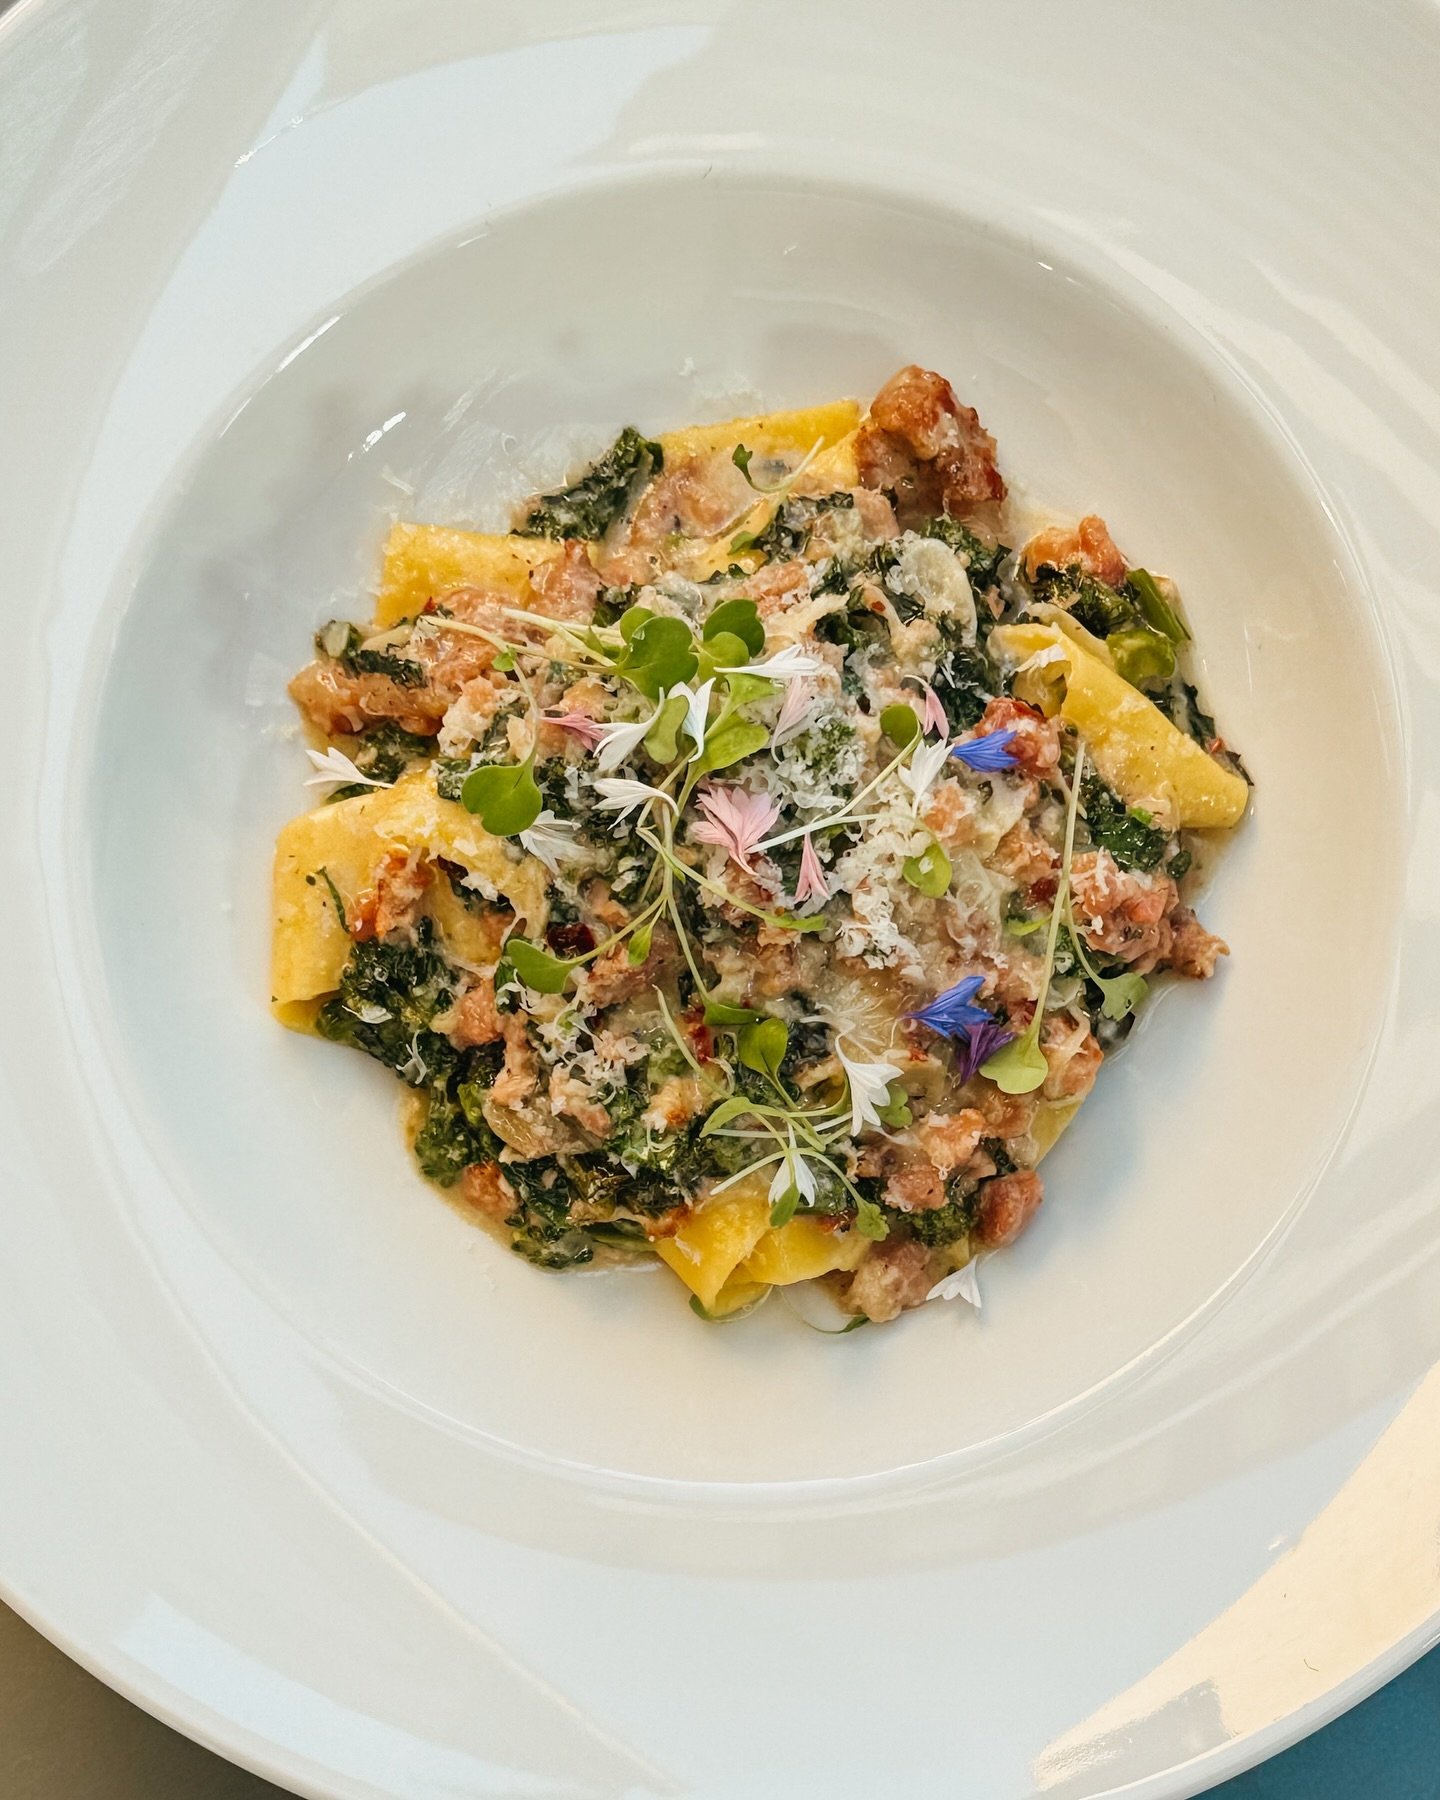 Housemade pappardelle 🌼 Toulouse sausage, chili flakes, pancetta, roasted broccoli rabe, garlic &amp; pecorino.